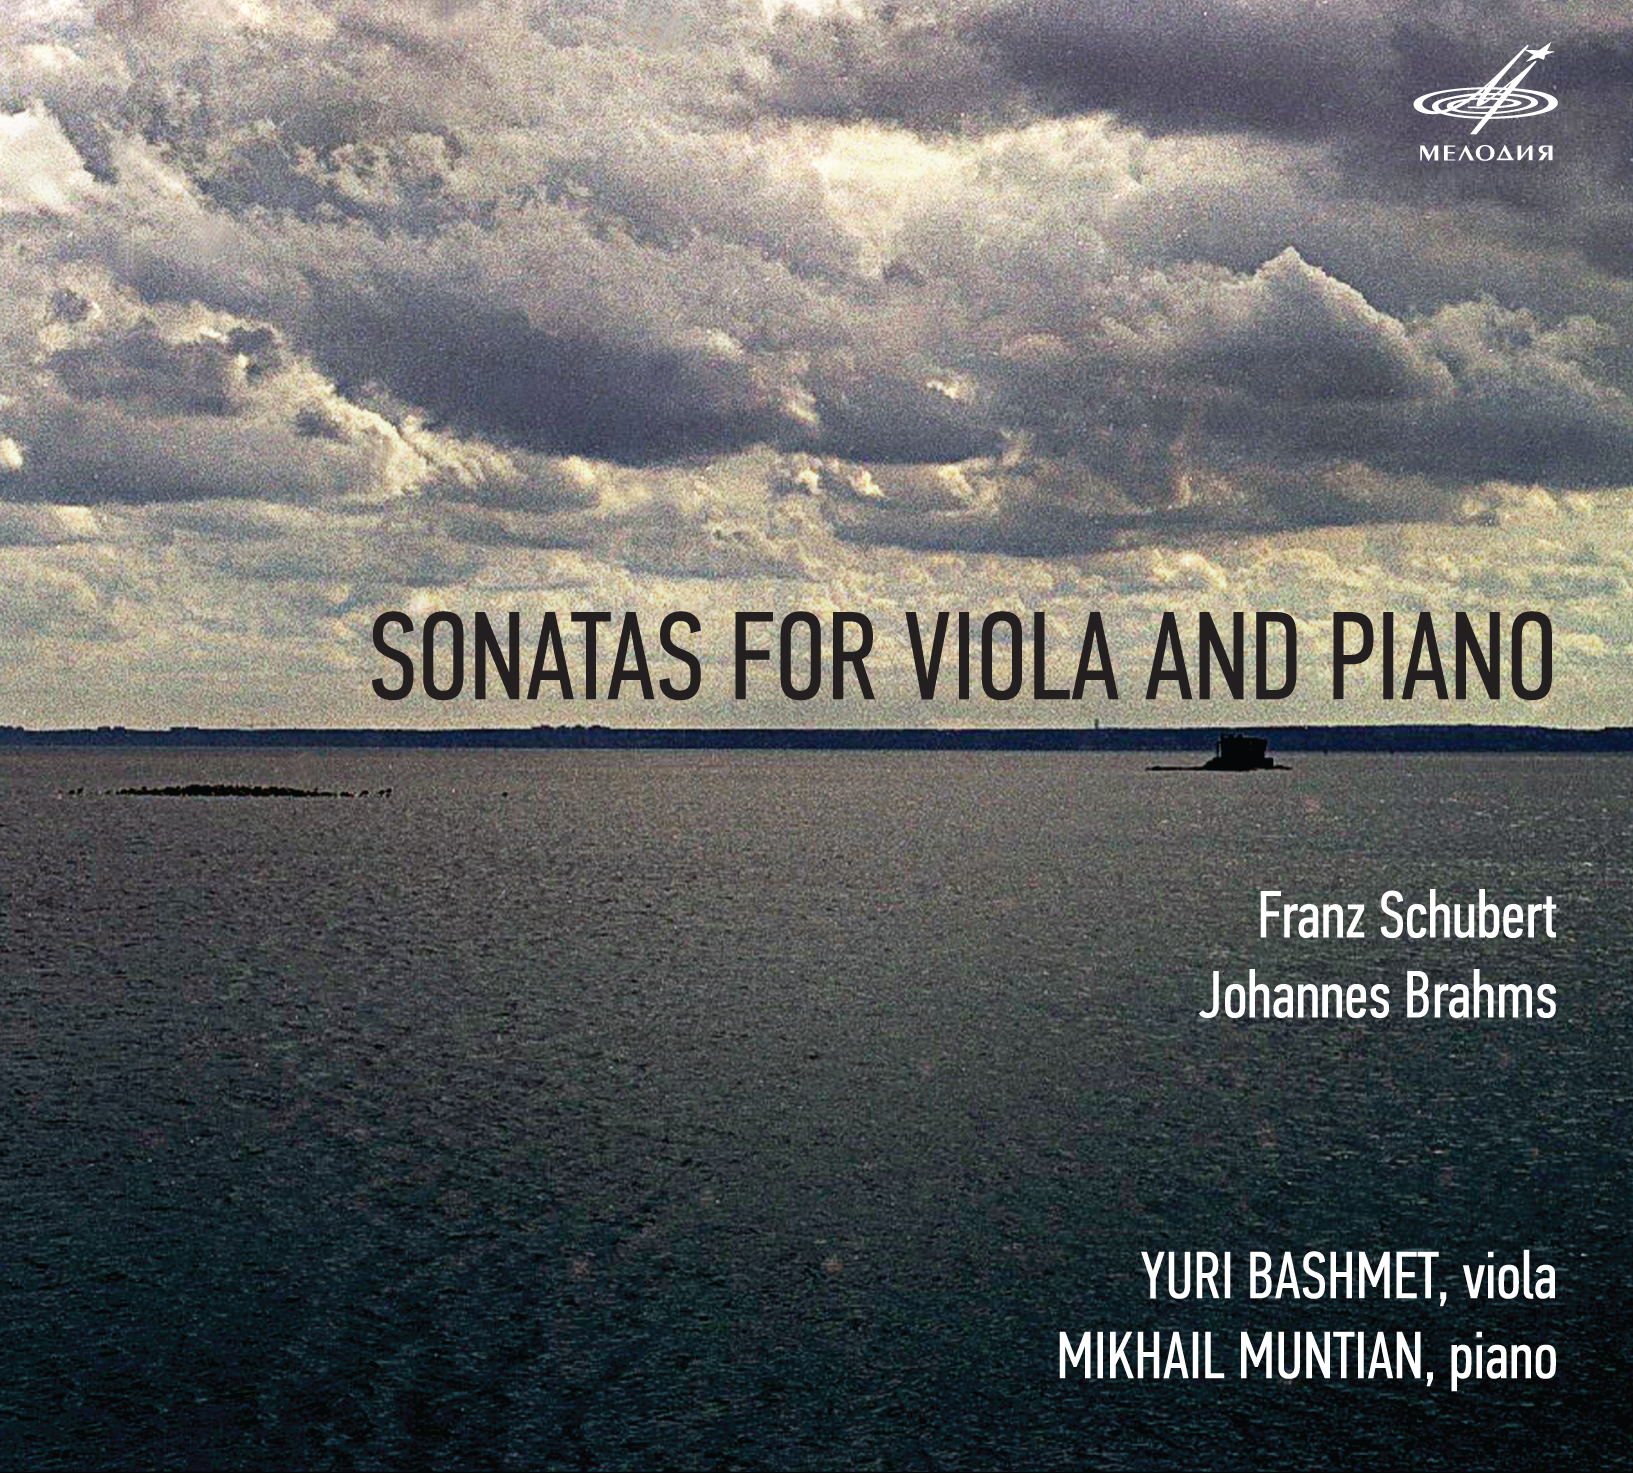 Franz Schubert & Johannes Brahms: Sonatas for Viola and Piano